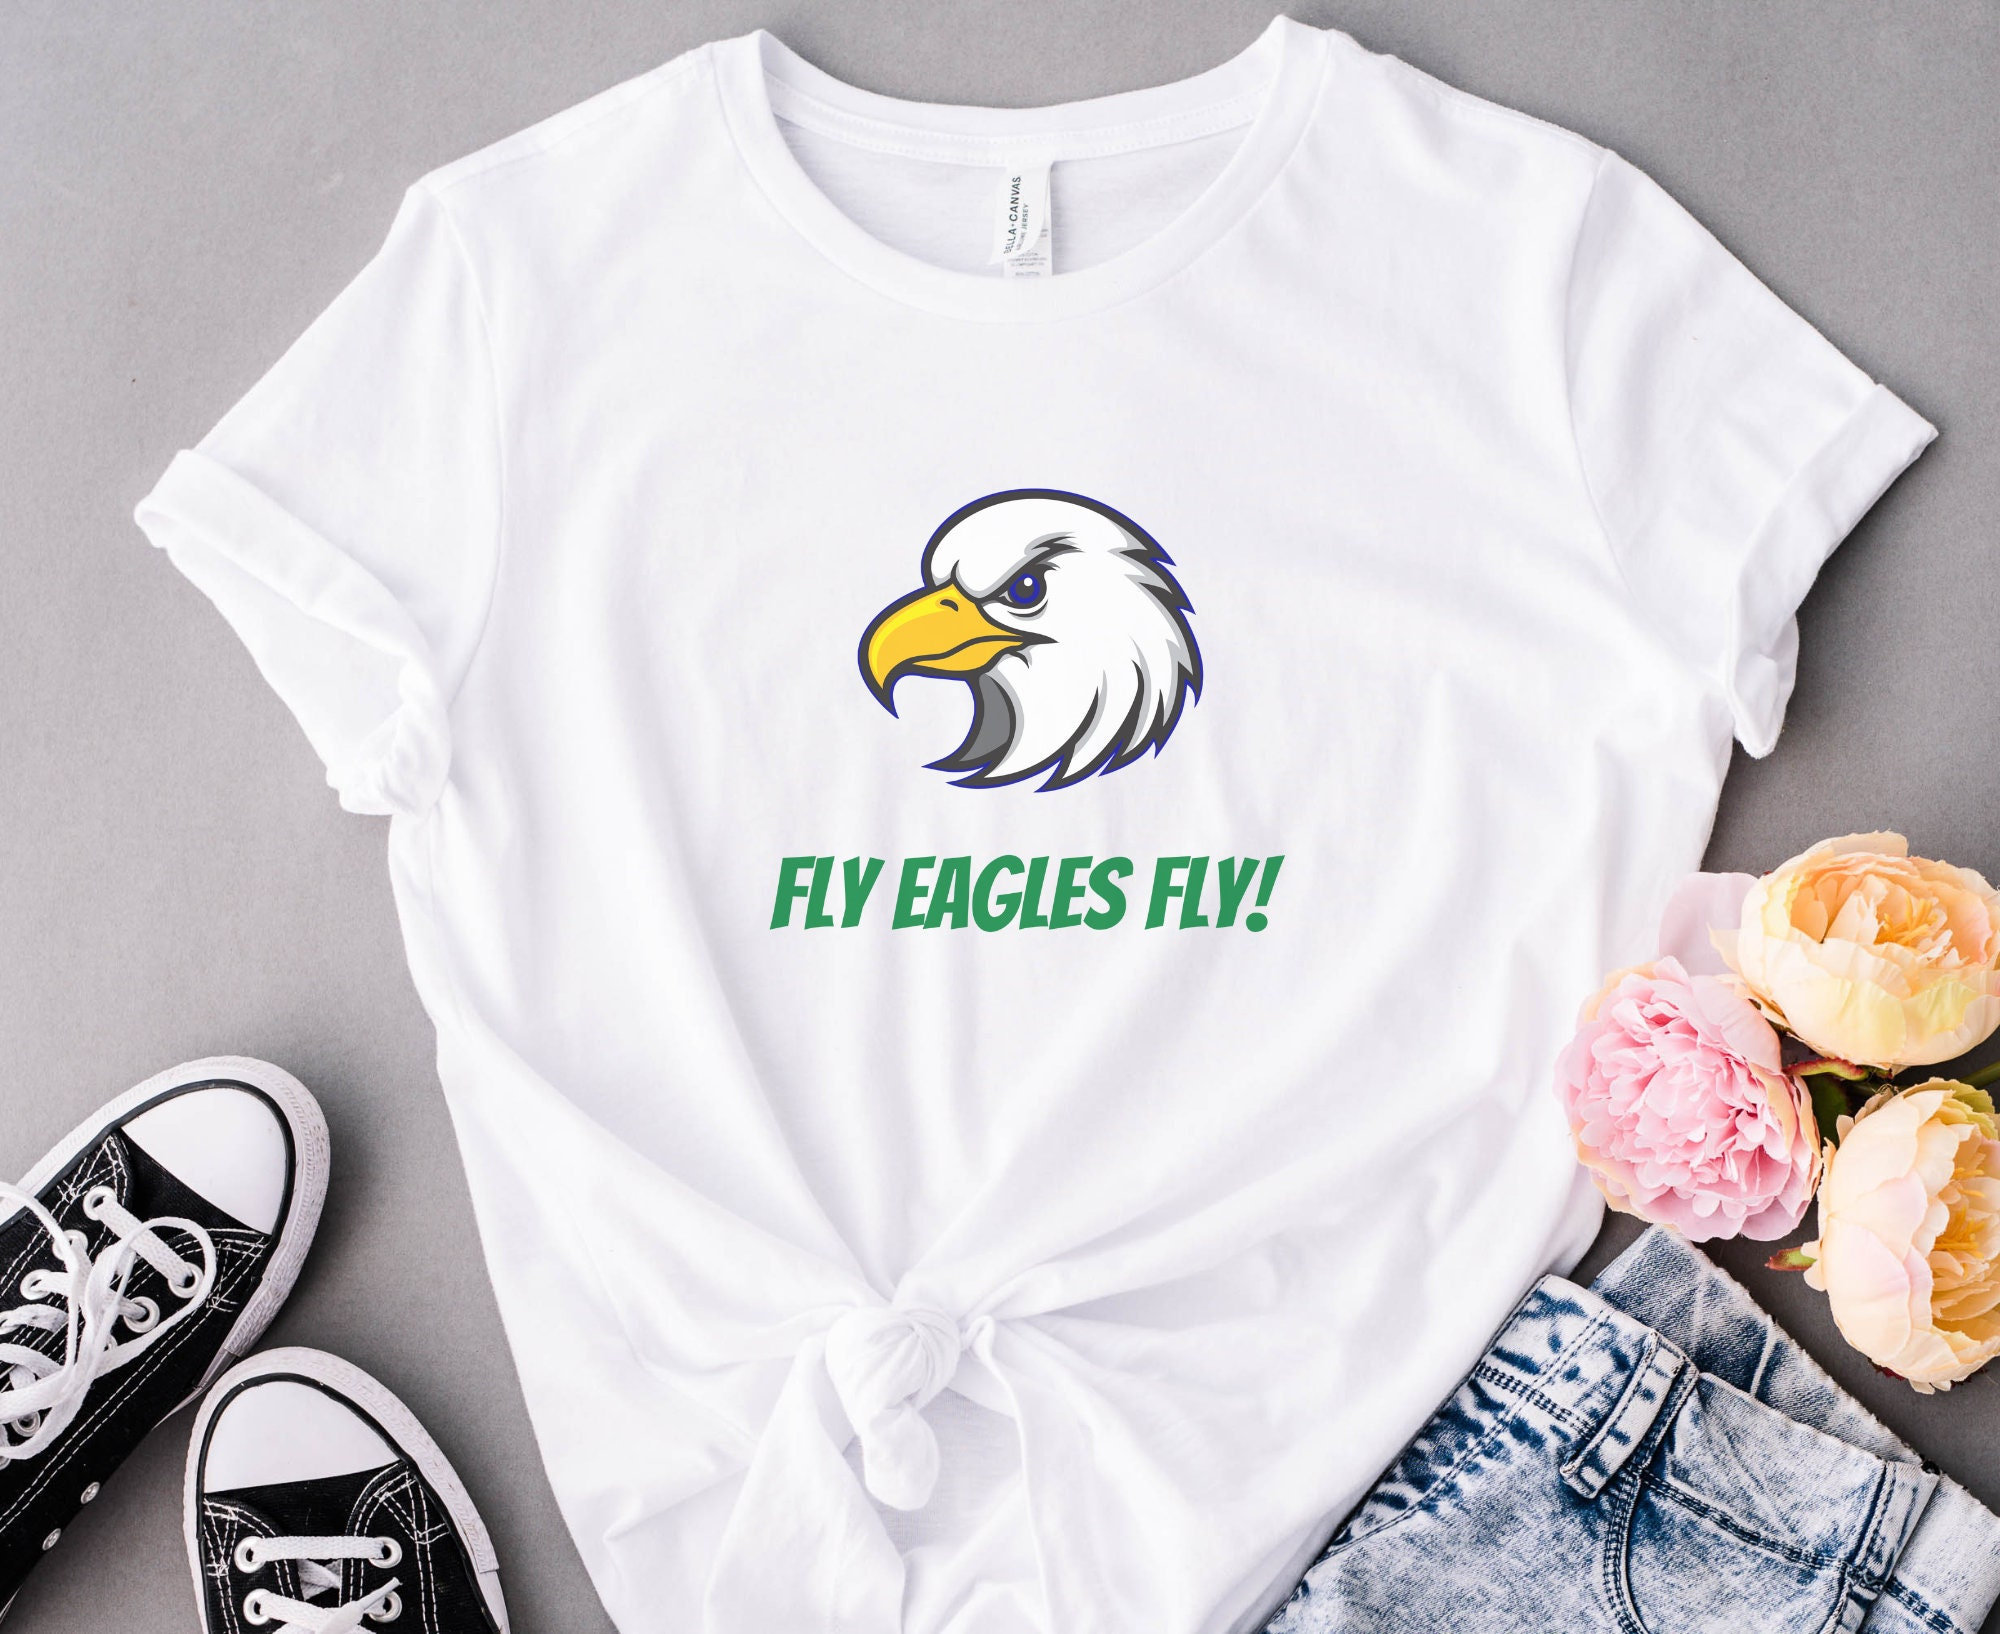 Discover Fly Eagles Fly Shirt, Philadelphia Football Shirt, Vintage Eagles Shirt, Football Lover, Go Eagles Gift